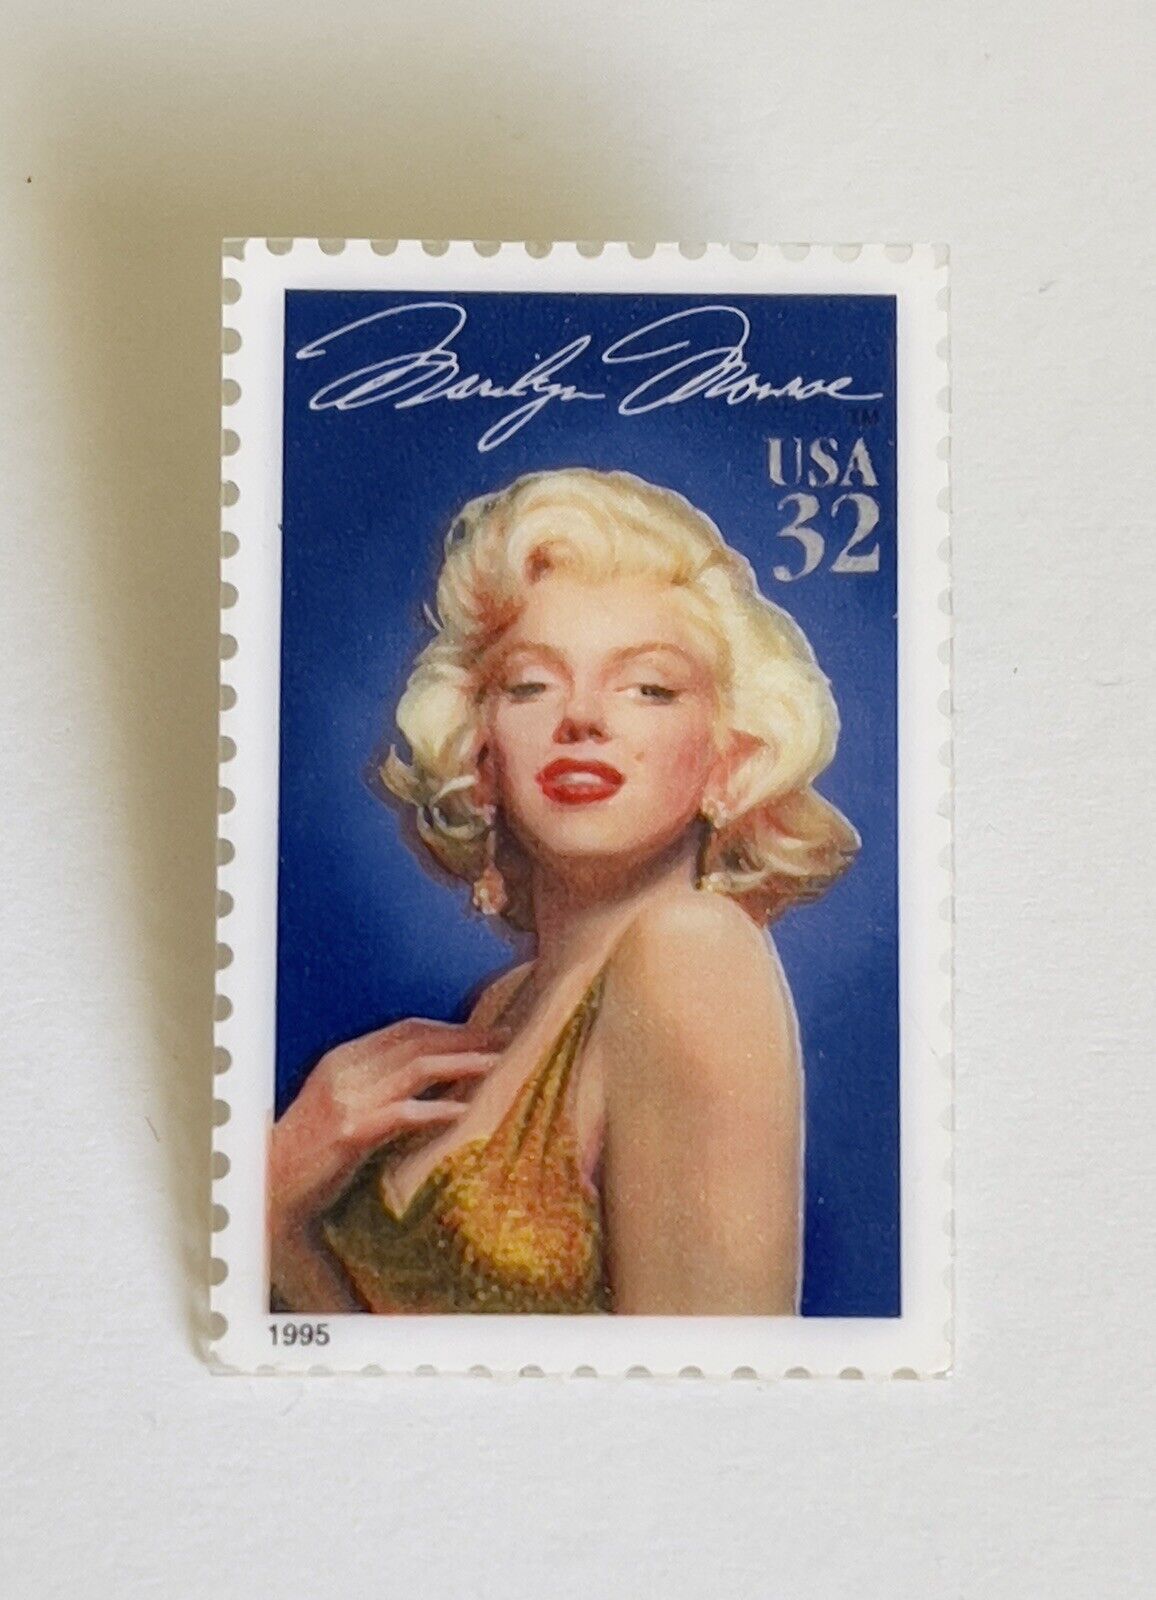 VTG 1995 Marilyn Monroe Legends of Hollywood USPS USA 32 Cent Stamp Laminate Pin